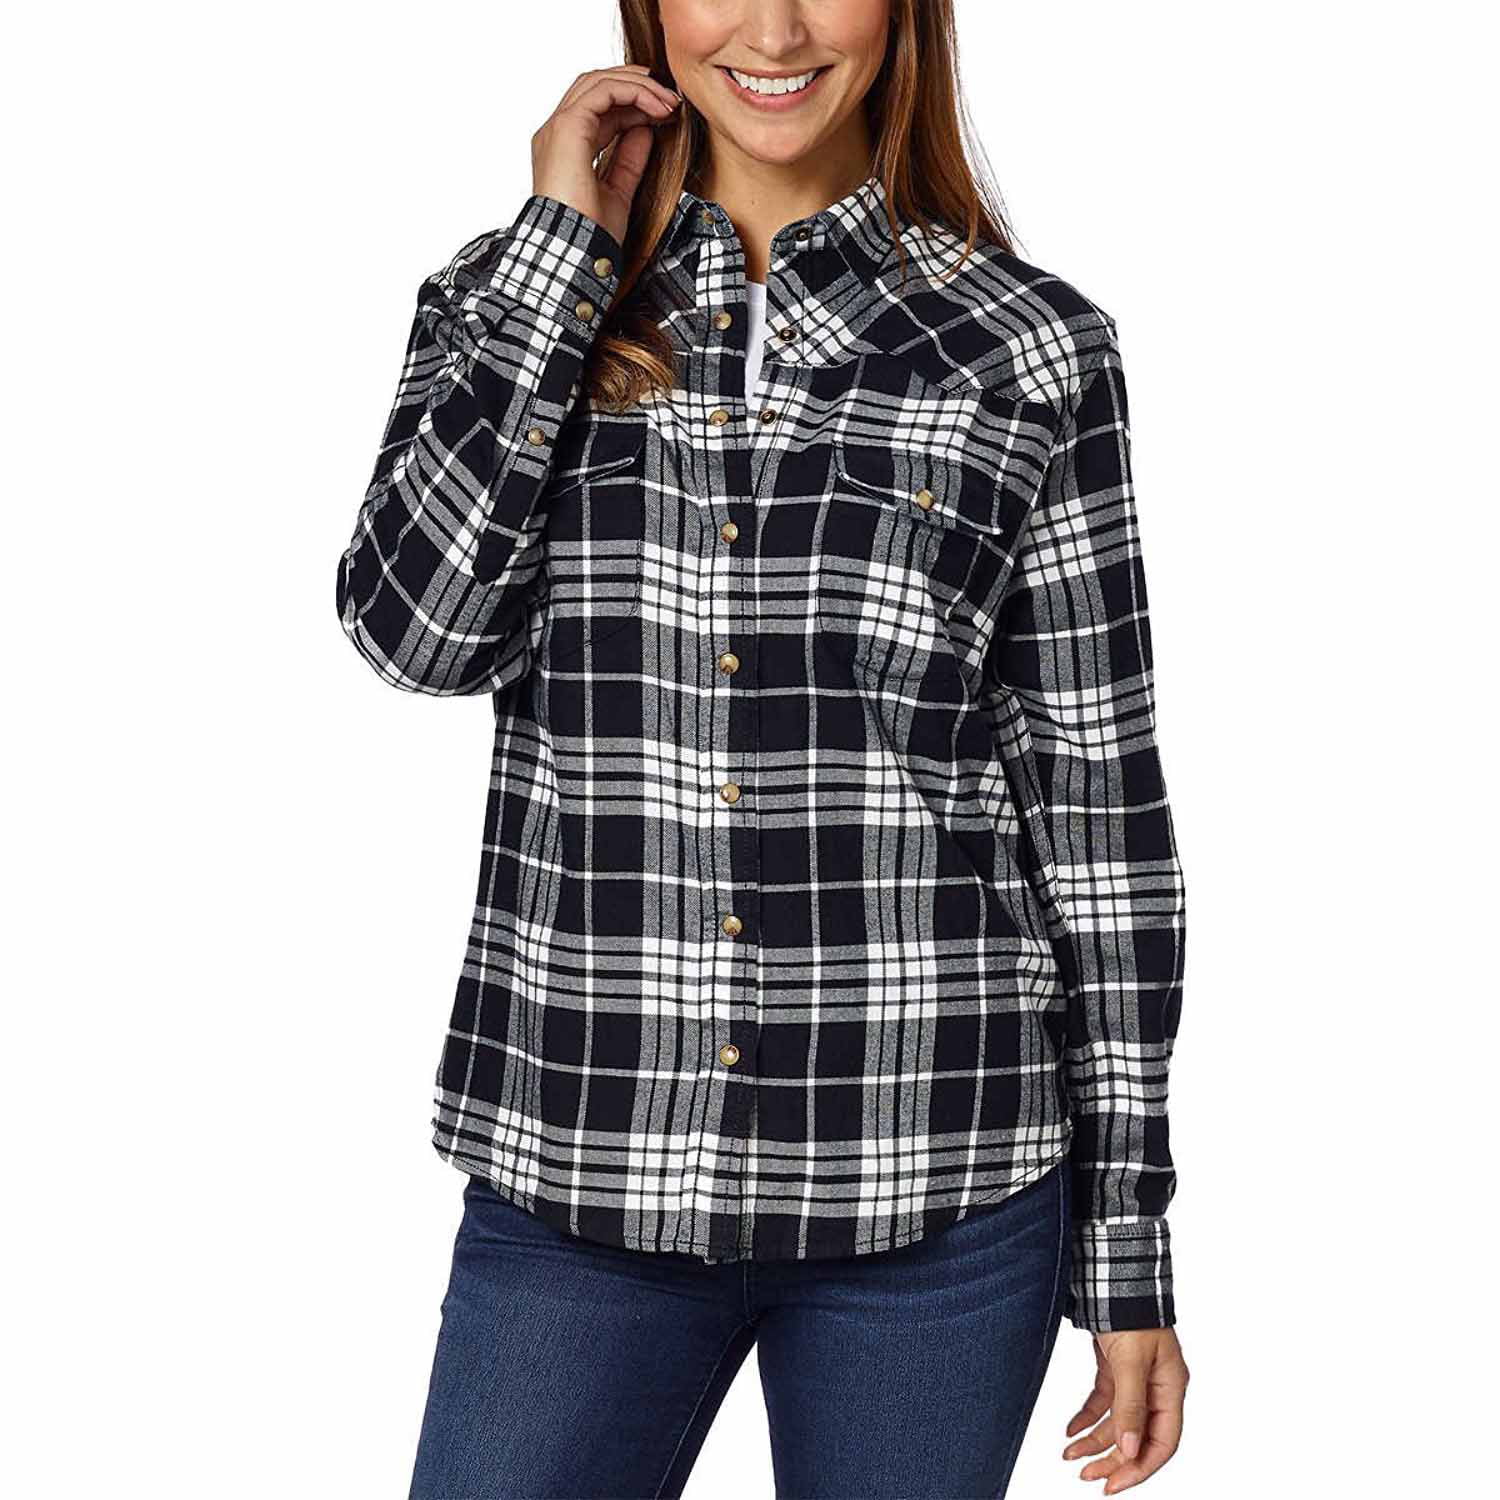 Jachs Girlfriend Womens Flannel Shirt (Black/White, X-Large) - Walmart.com